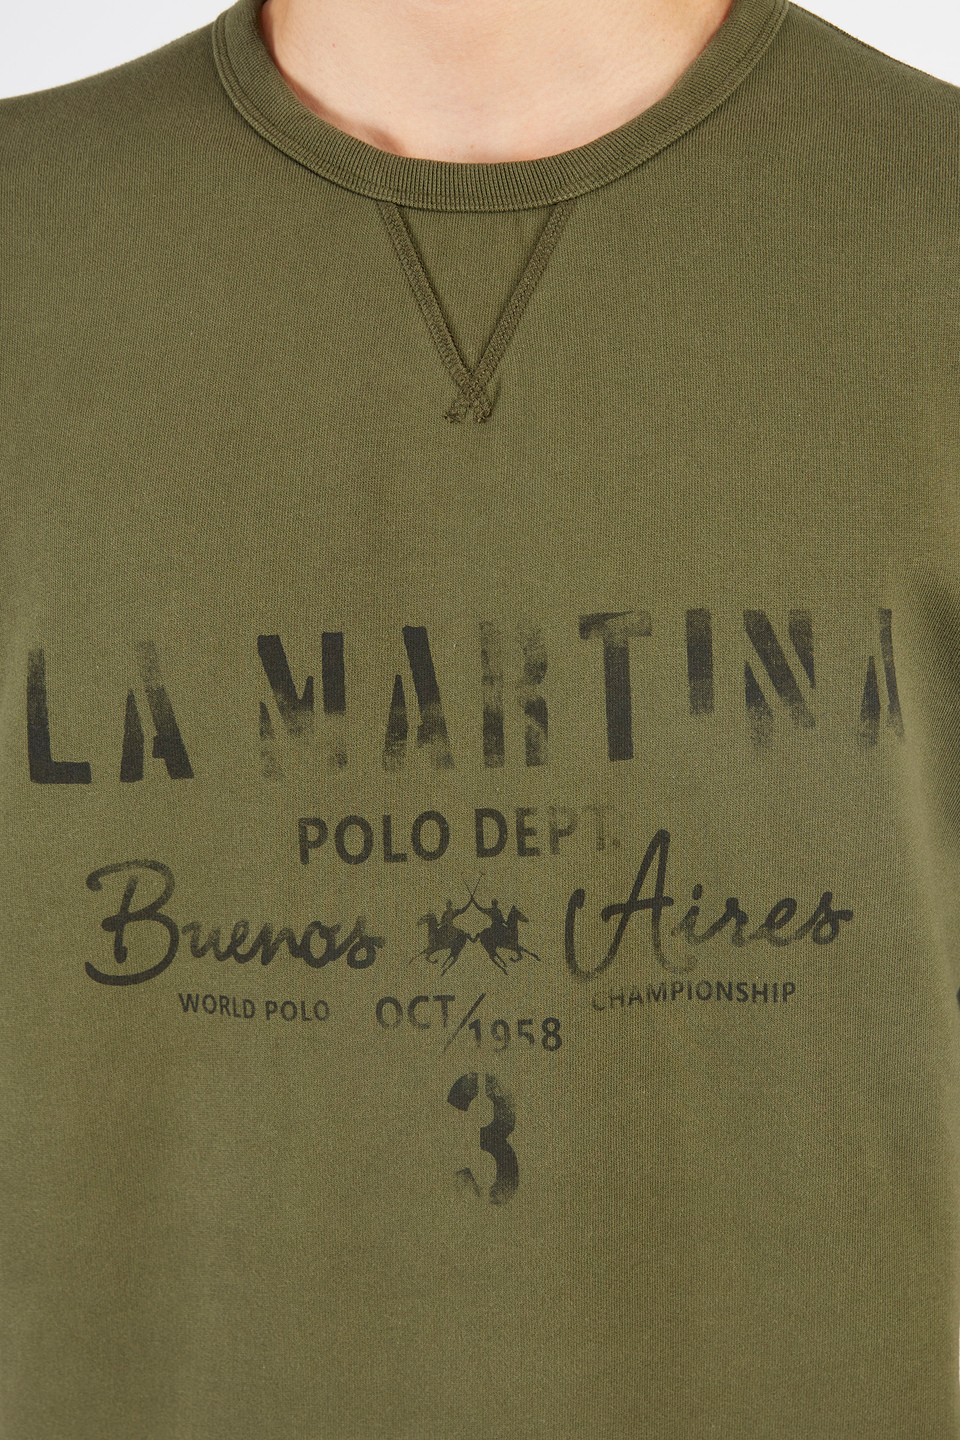 Men’s sweatshirt in 100% cotton regular fit | La Martina - Official Online Shop